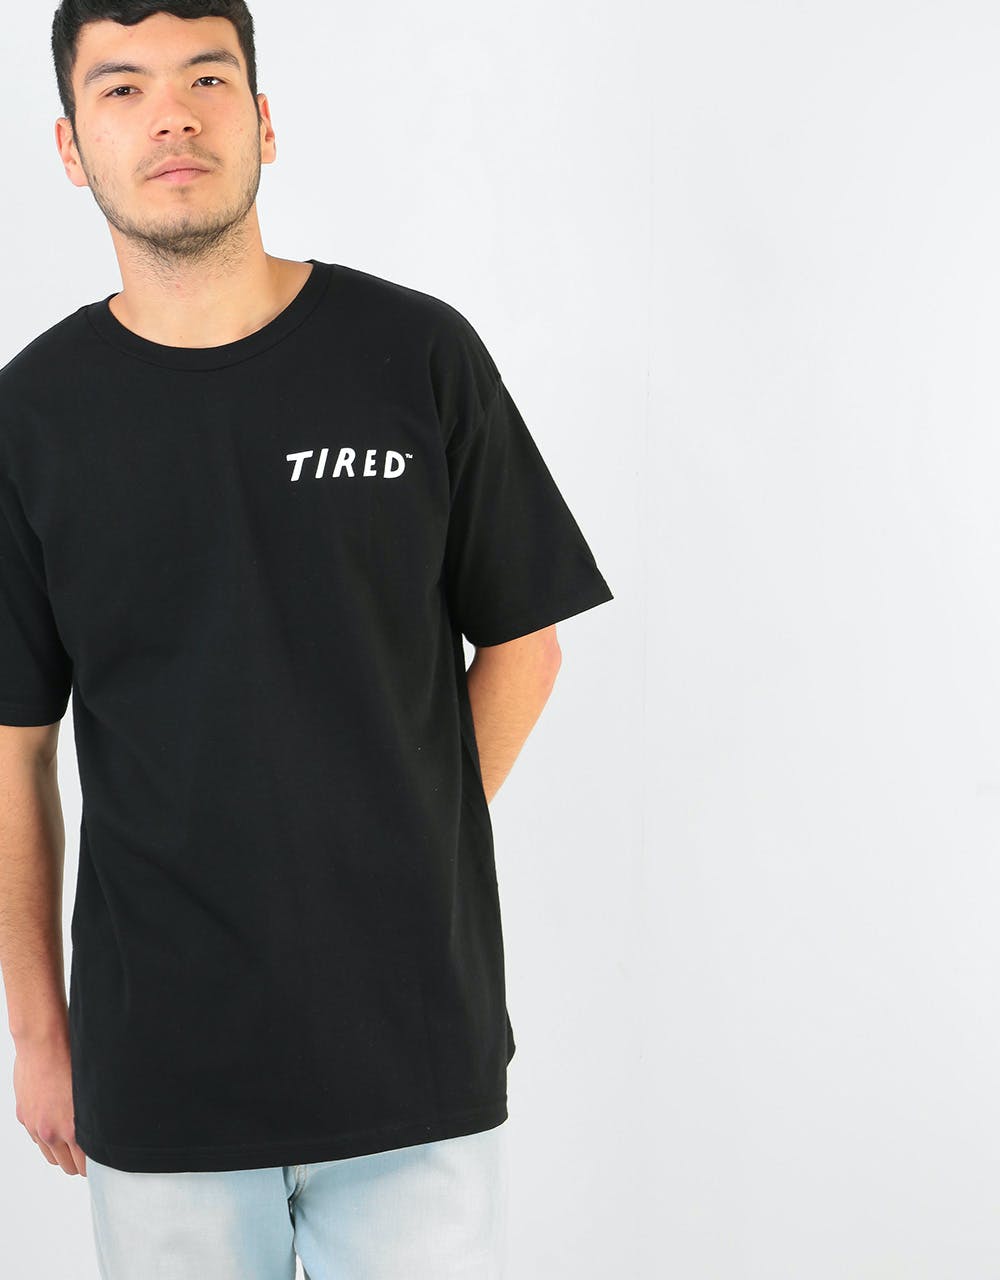 Tired Text T-Shirt - Black